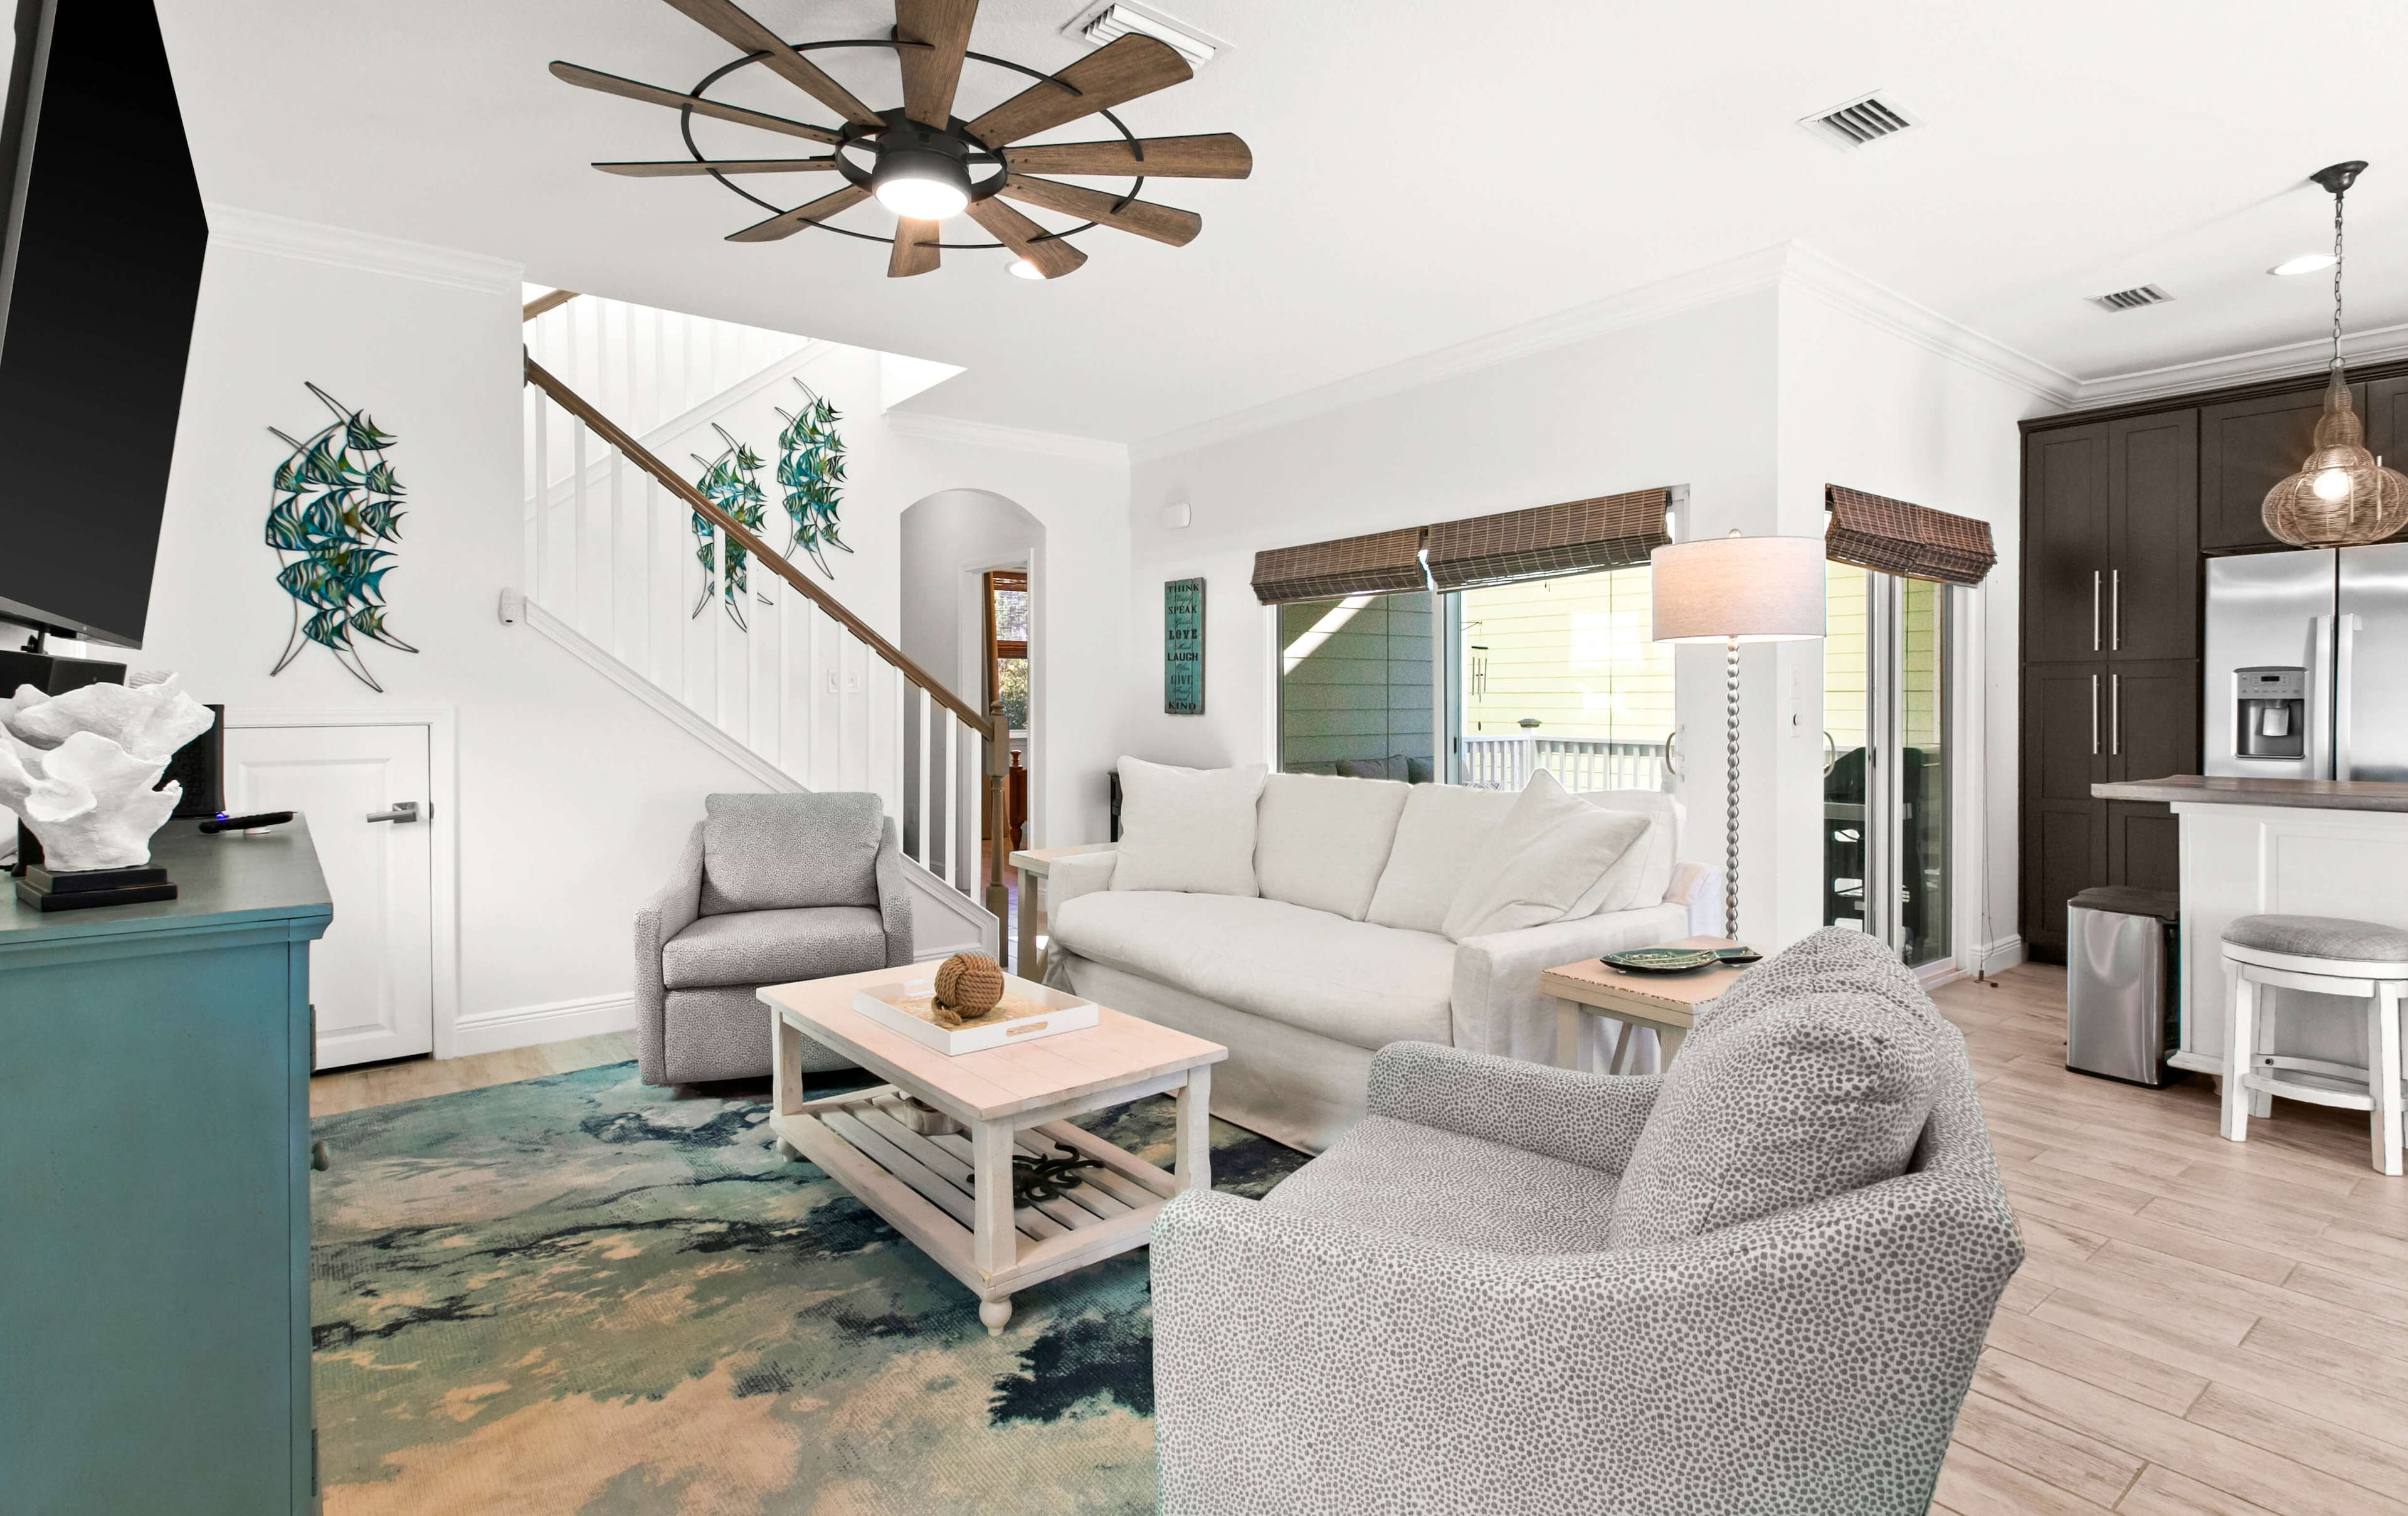 Designer interiors adorn this relaxing home